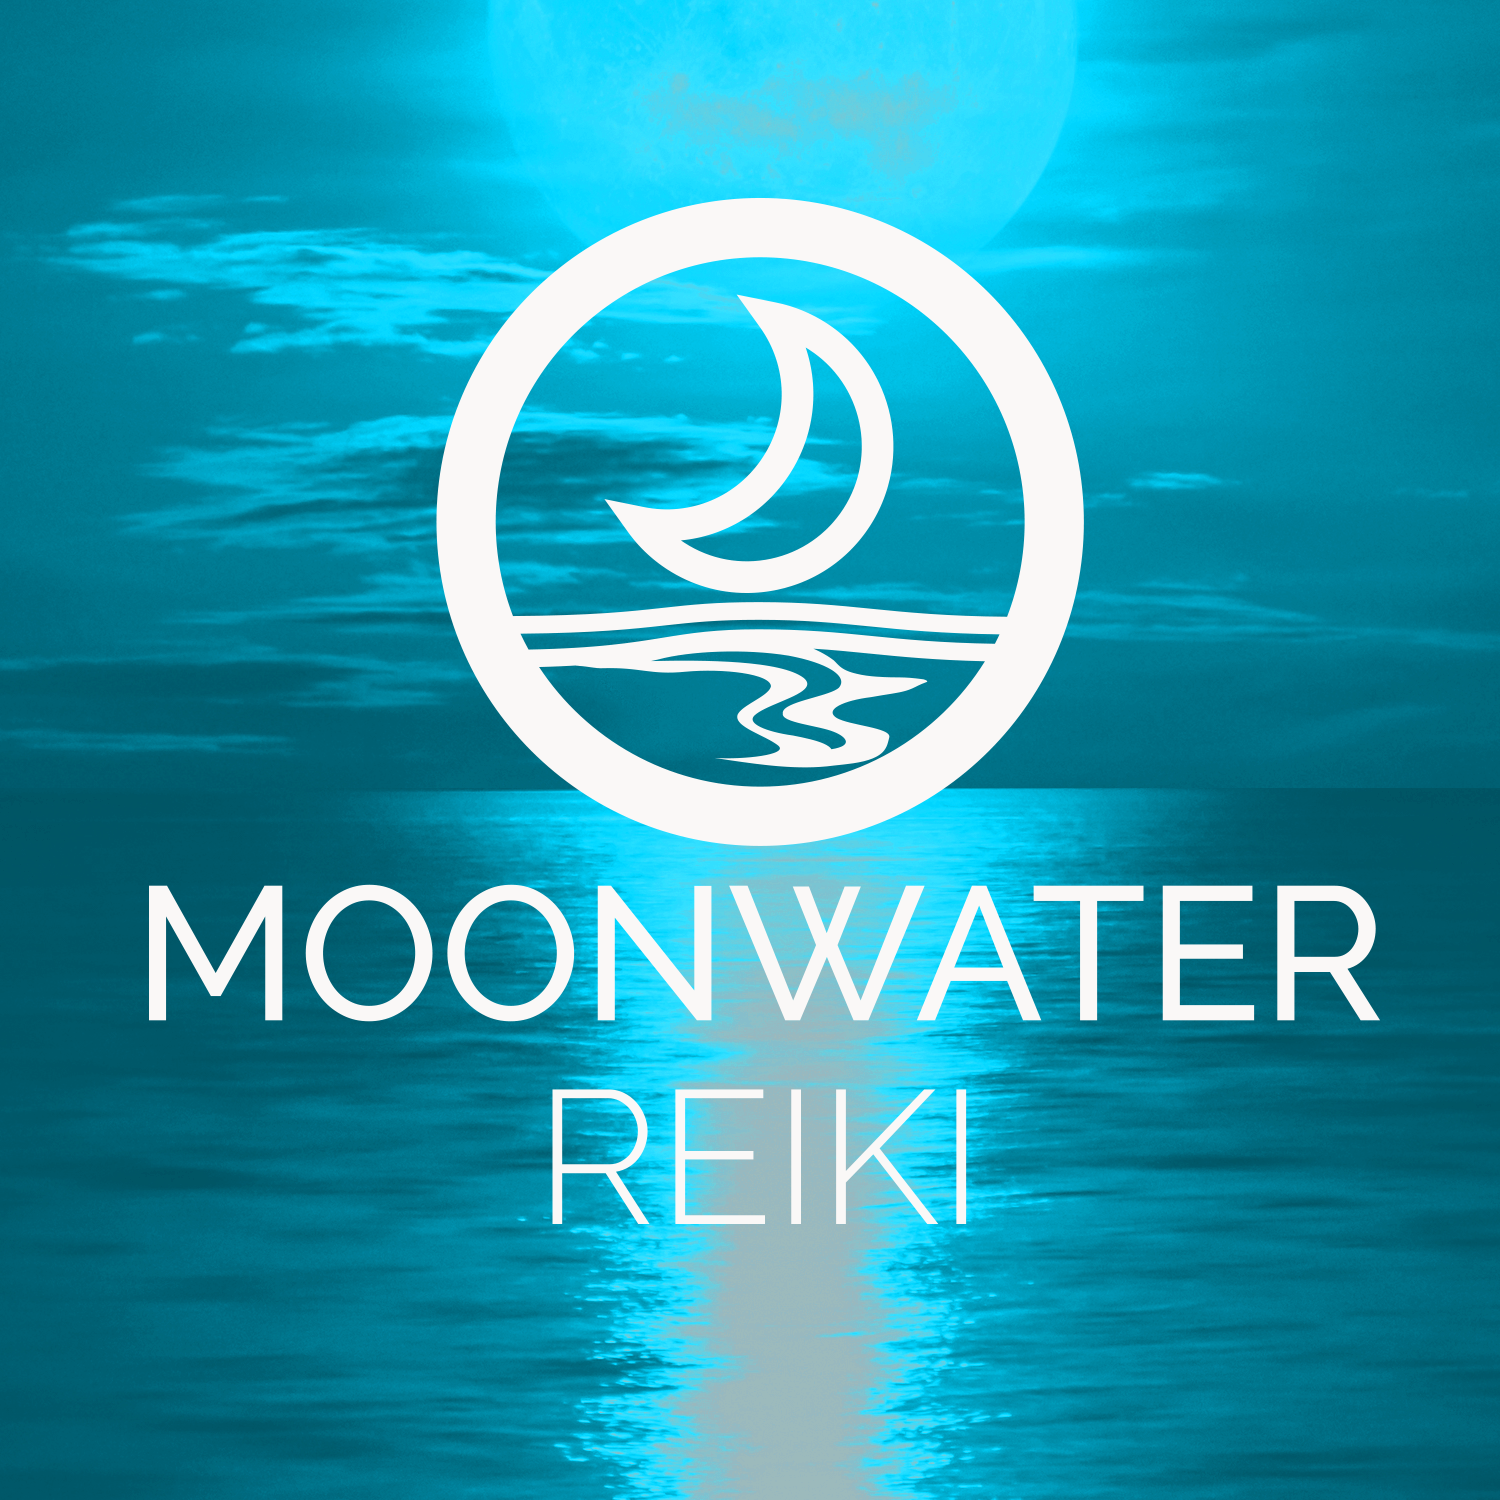 Moonwater Reiki